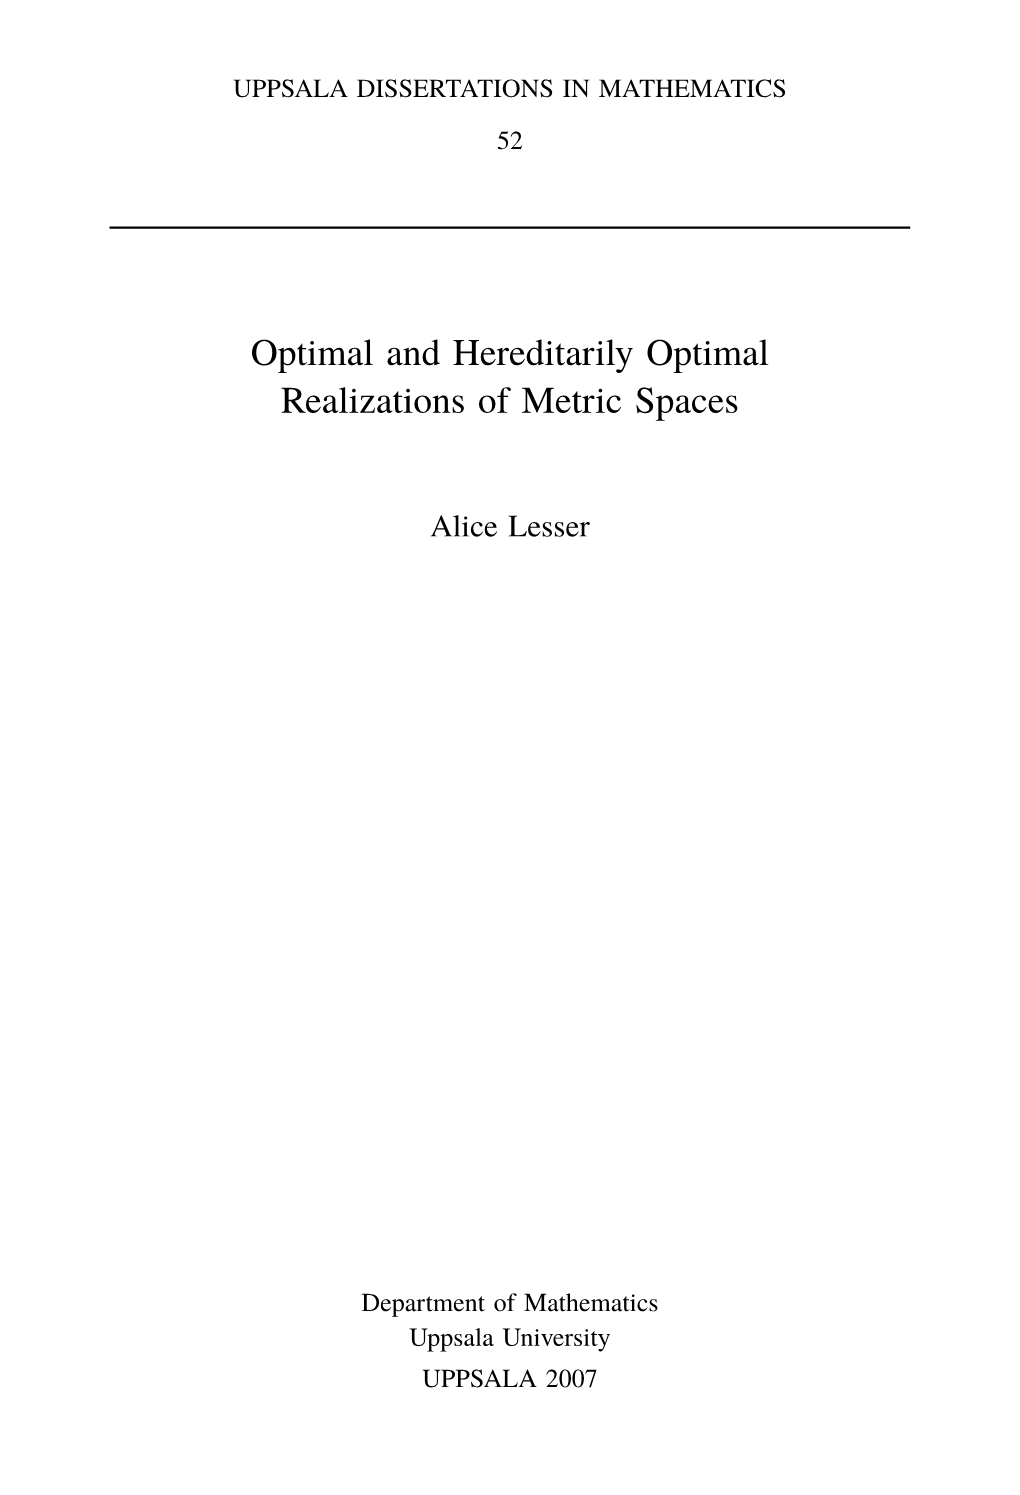 Optimal and Hereditarily Optimal Realizations of Metric Spaces